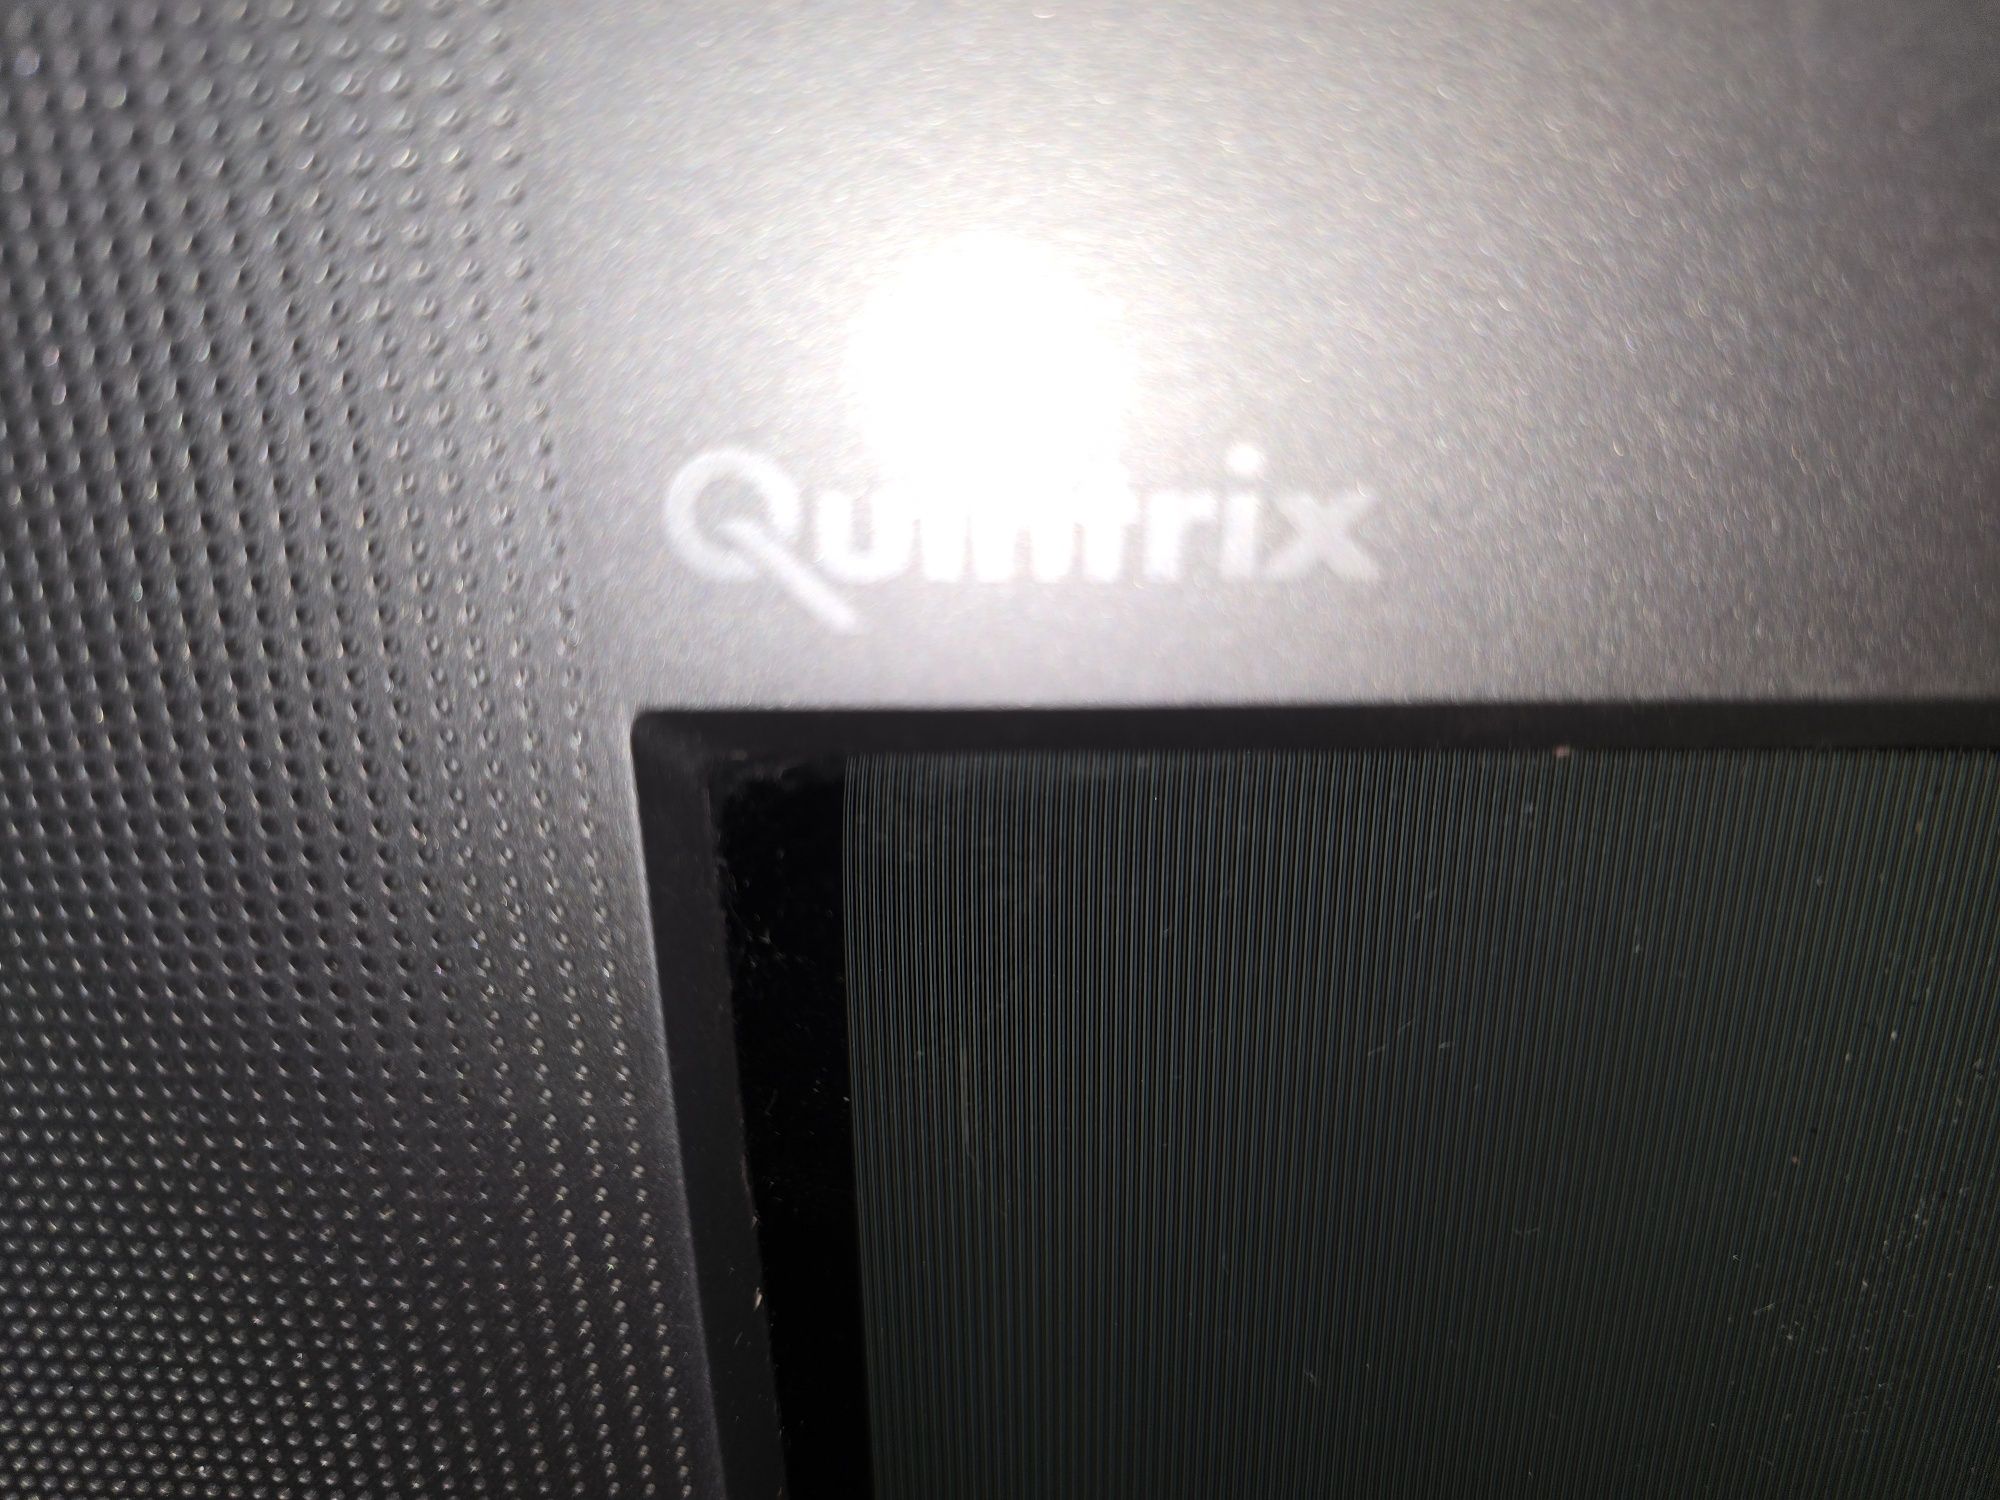 Telewizor analogowy Panasonic Quintrix